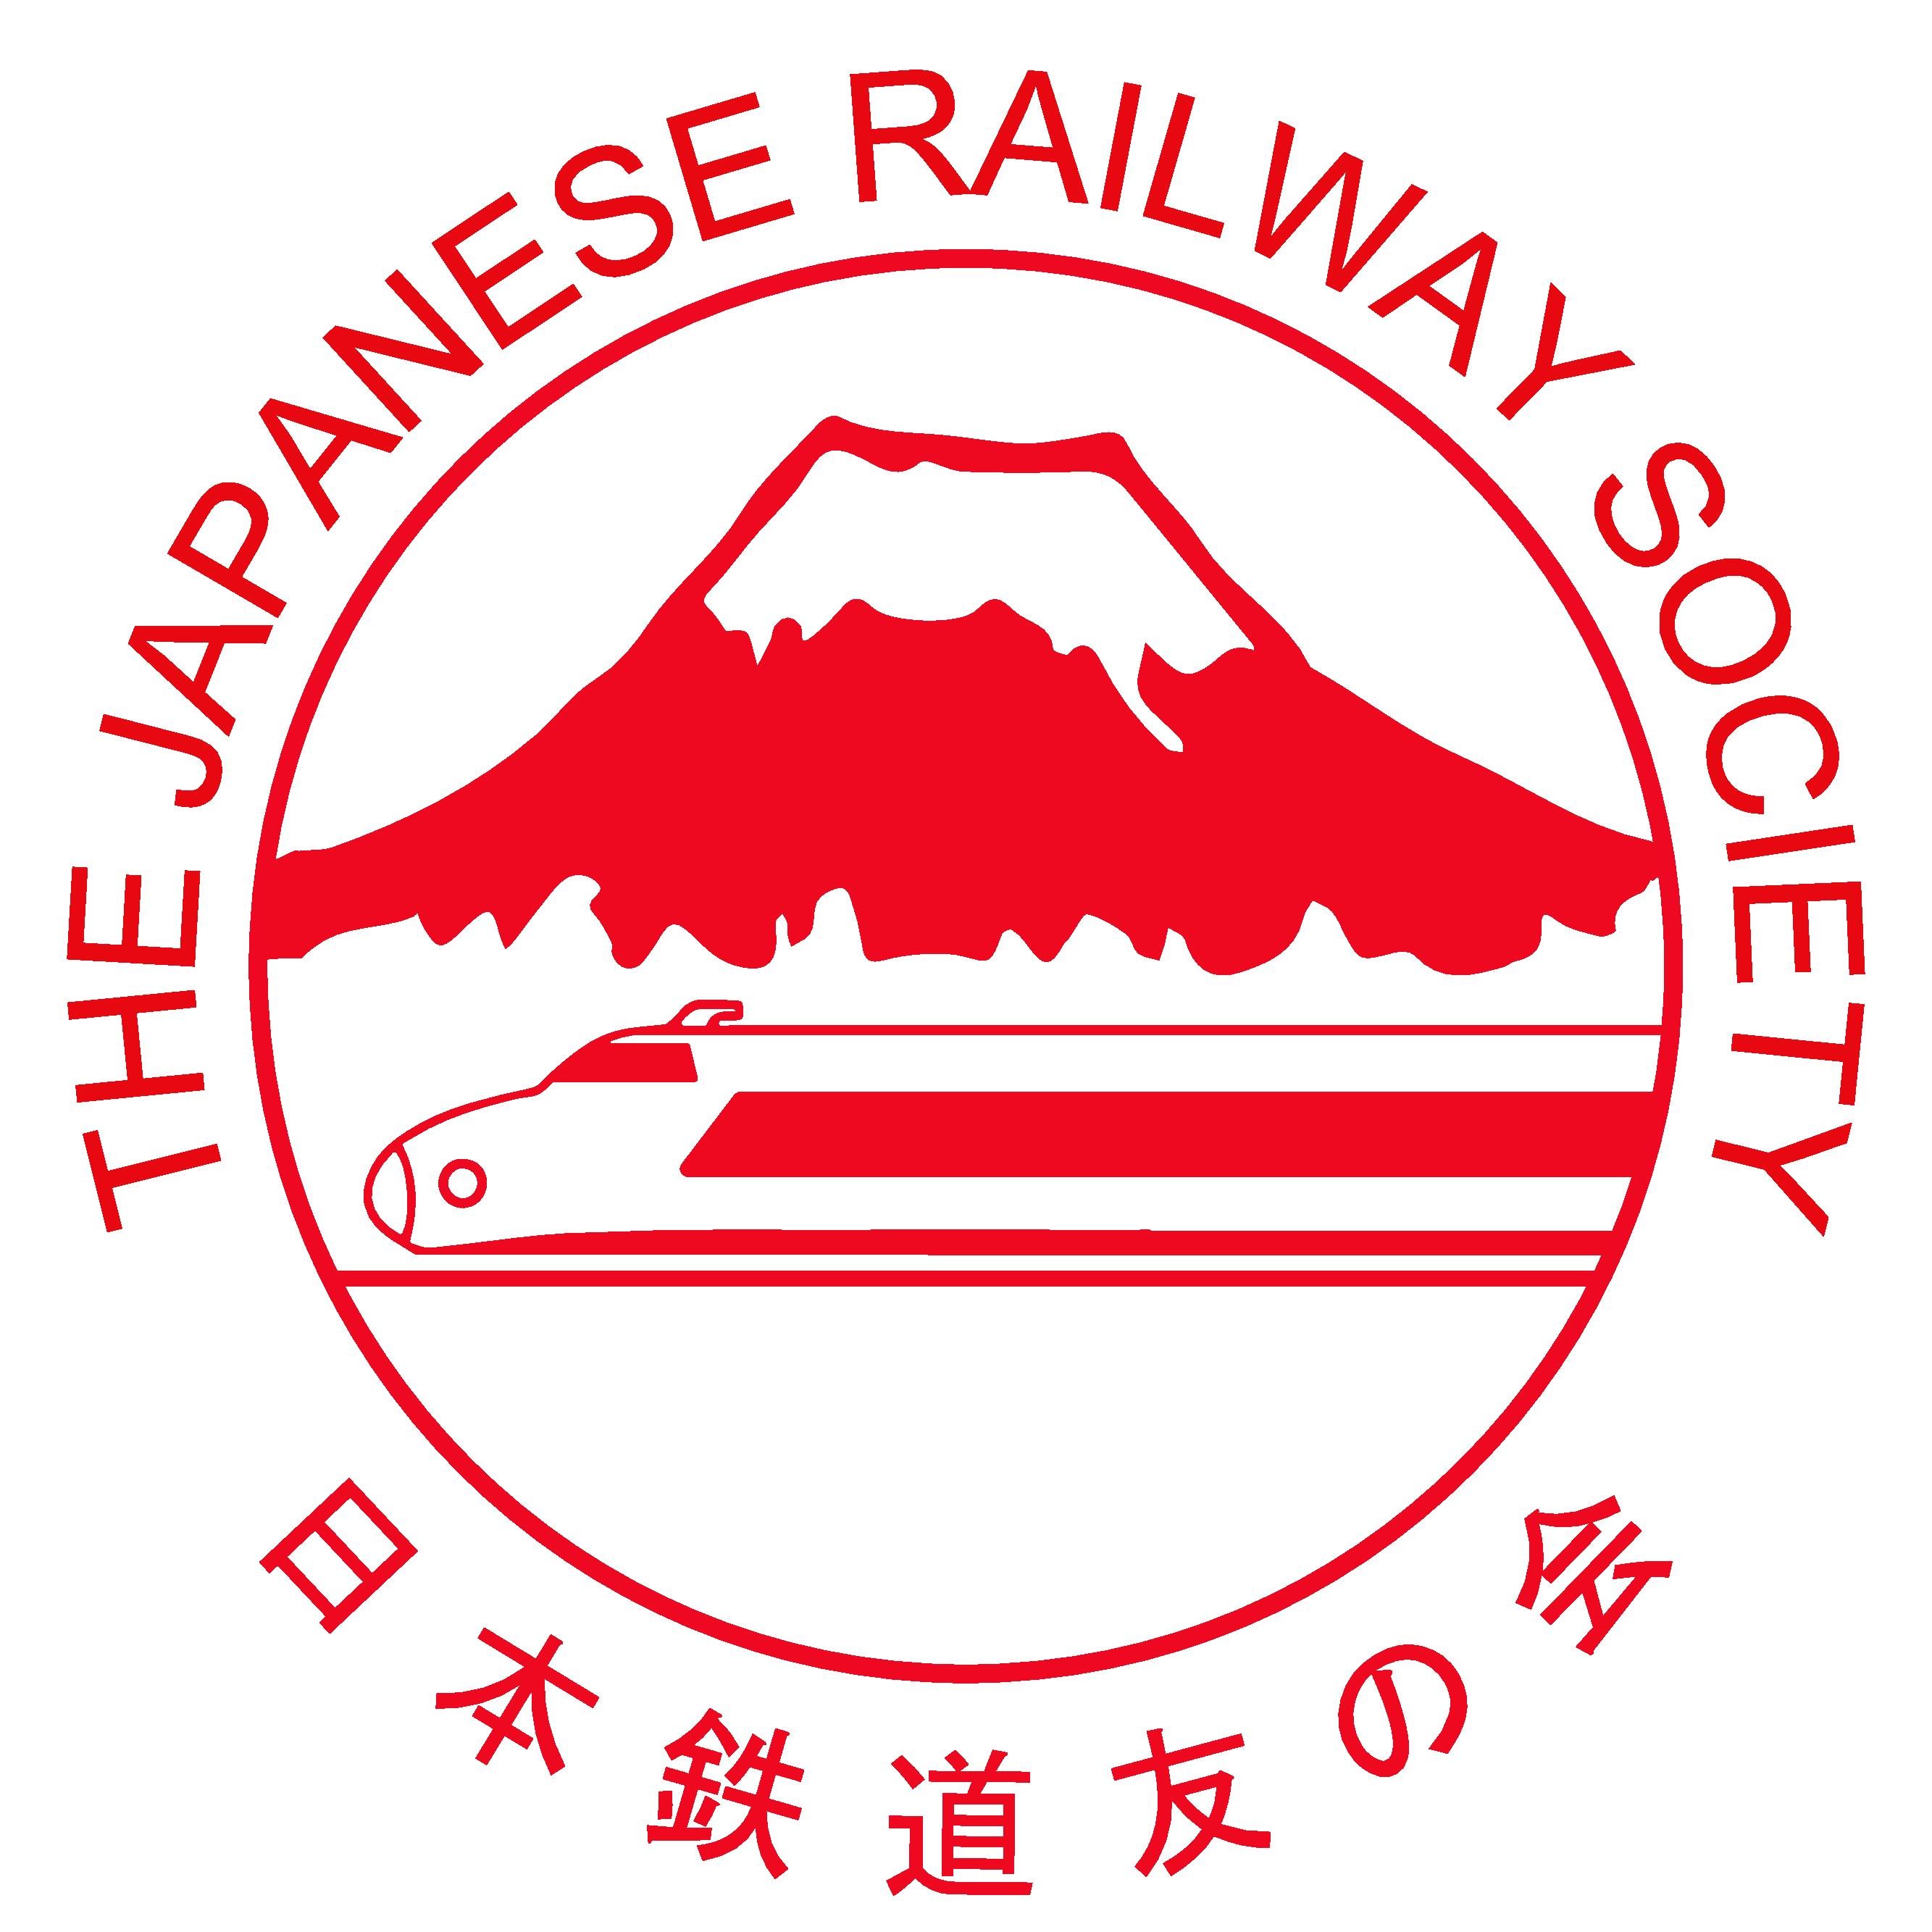 Japanese Railway Society